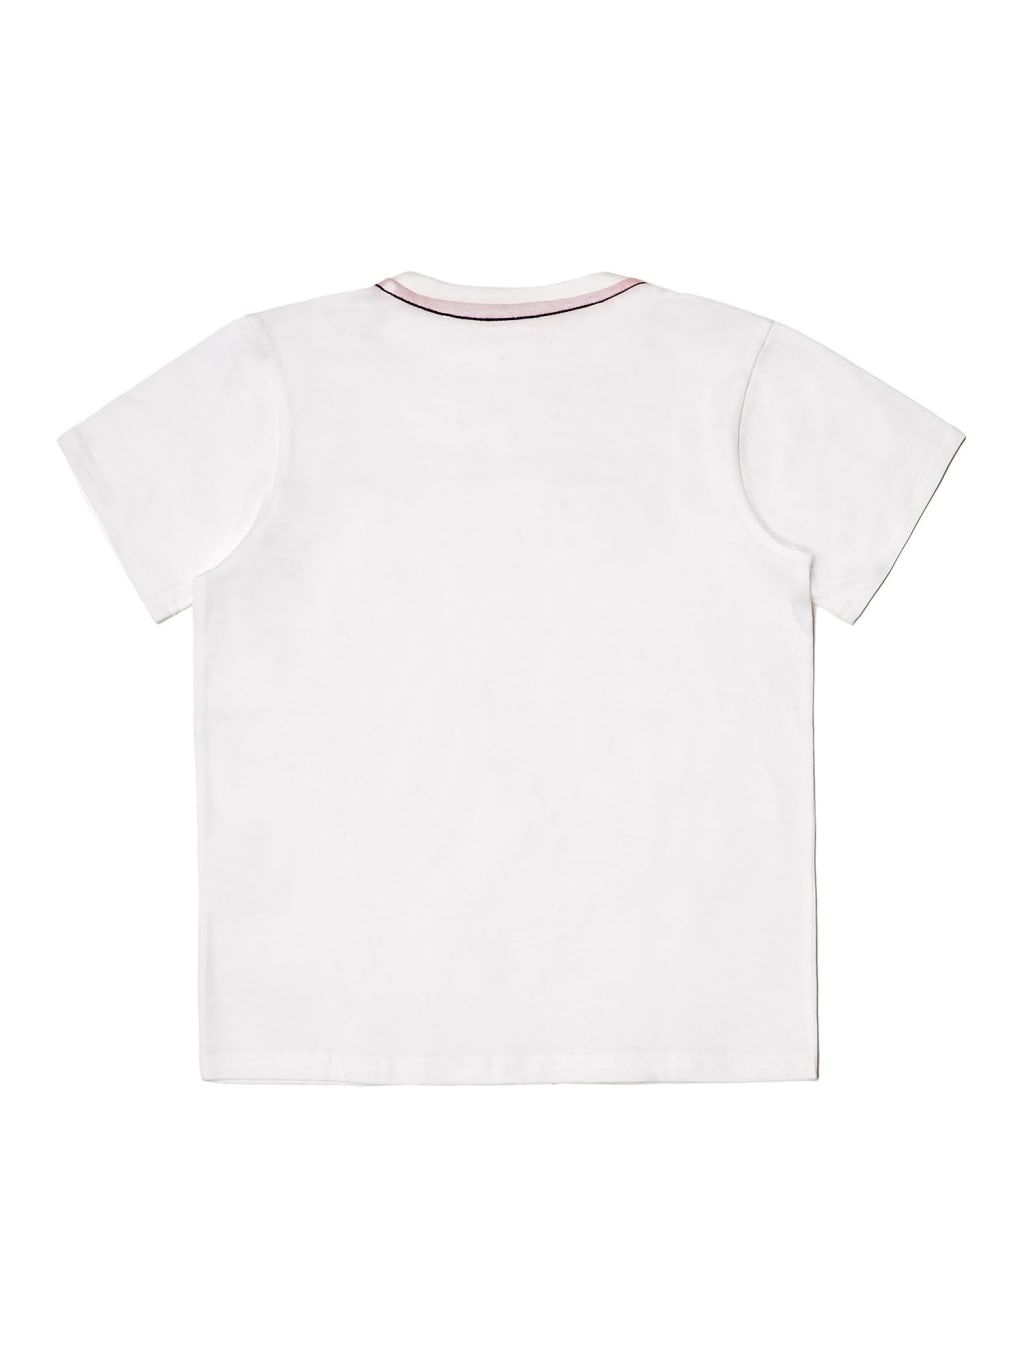 T-Shirt mezza manica |L73I55| - Coccole e Ricami |email: info@coccoleericami.shop| P.Iva 09642670583